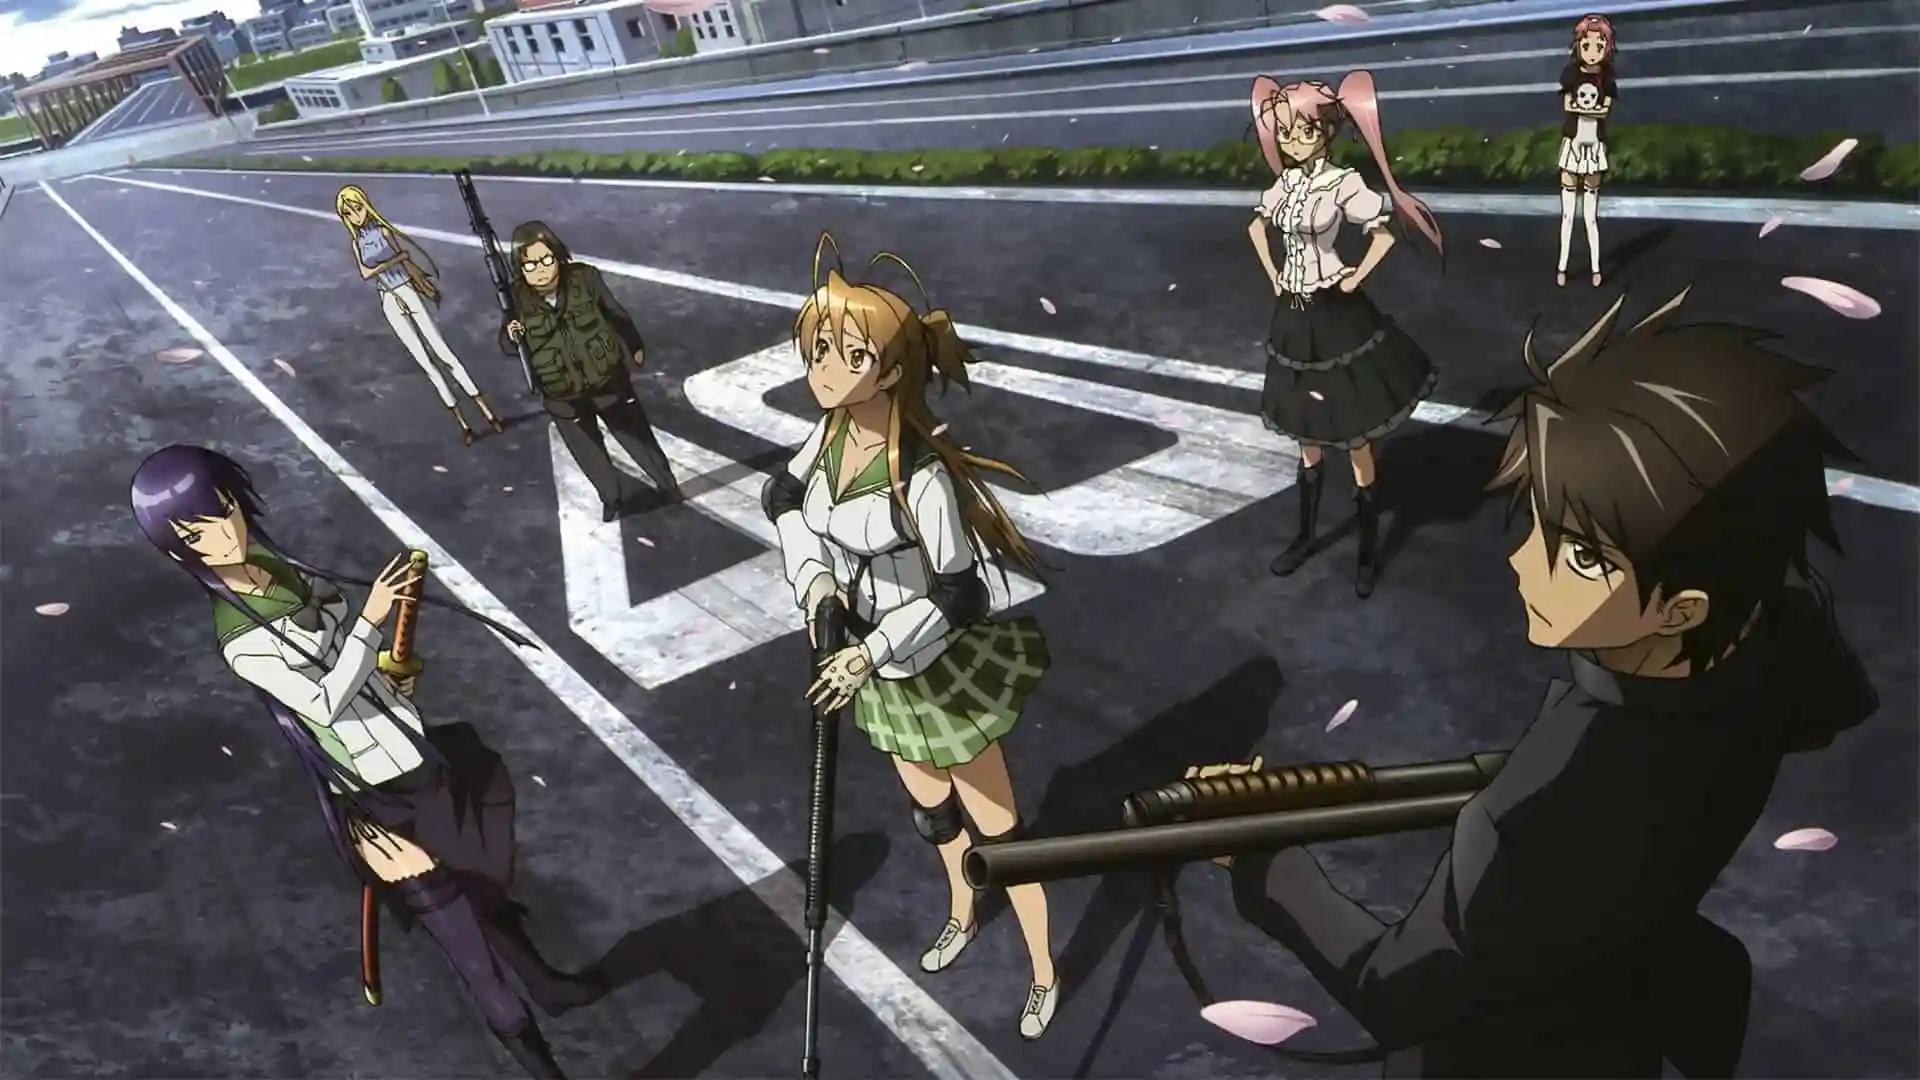 15 Anime Like Highschool of the Dead - ReelRundown